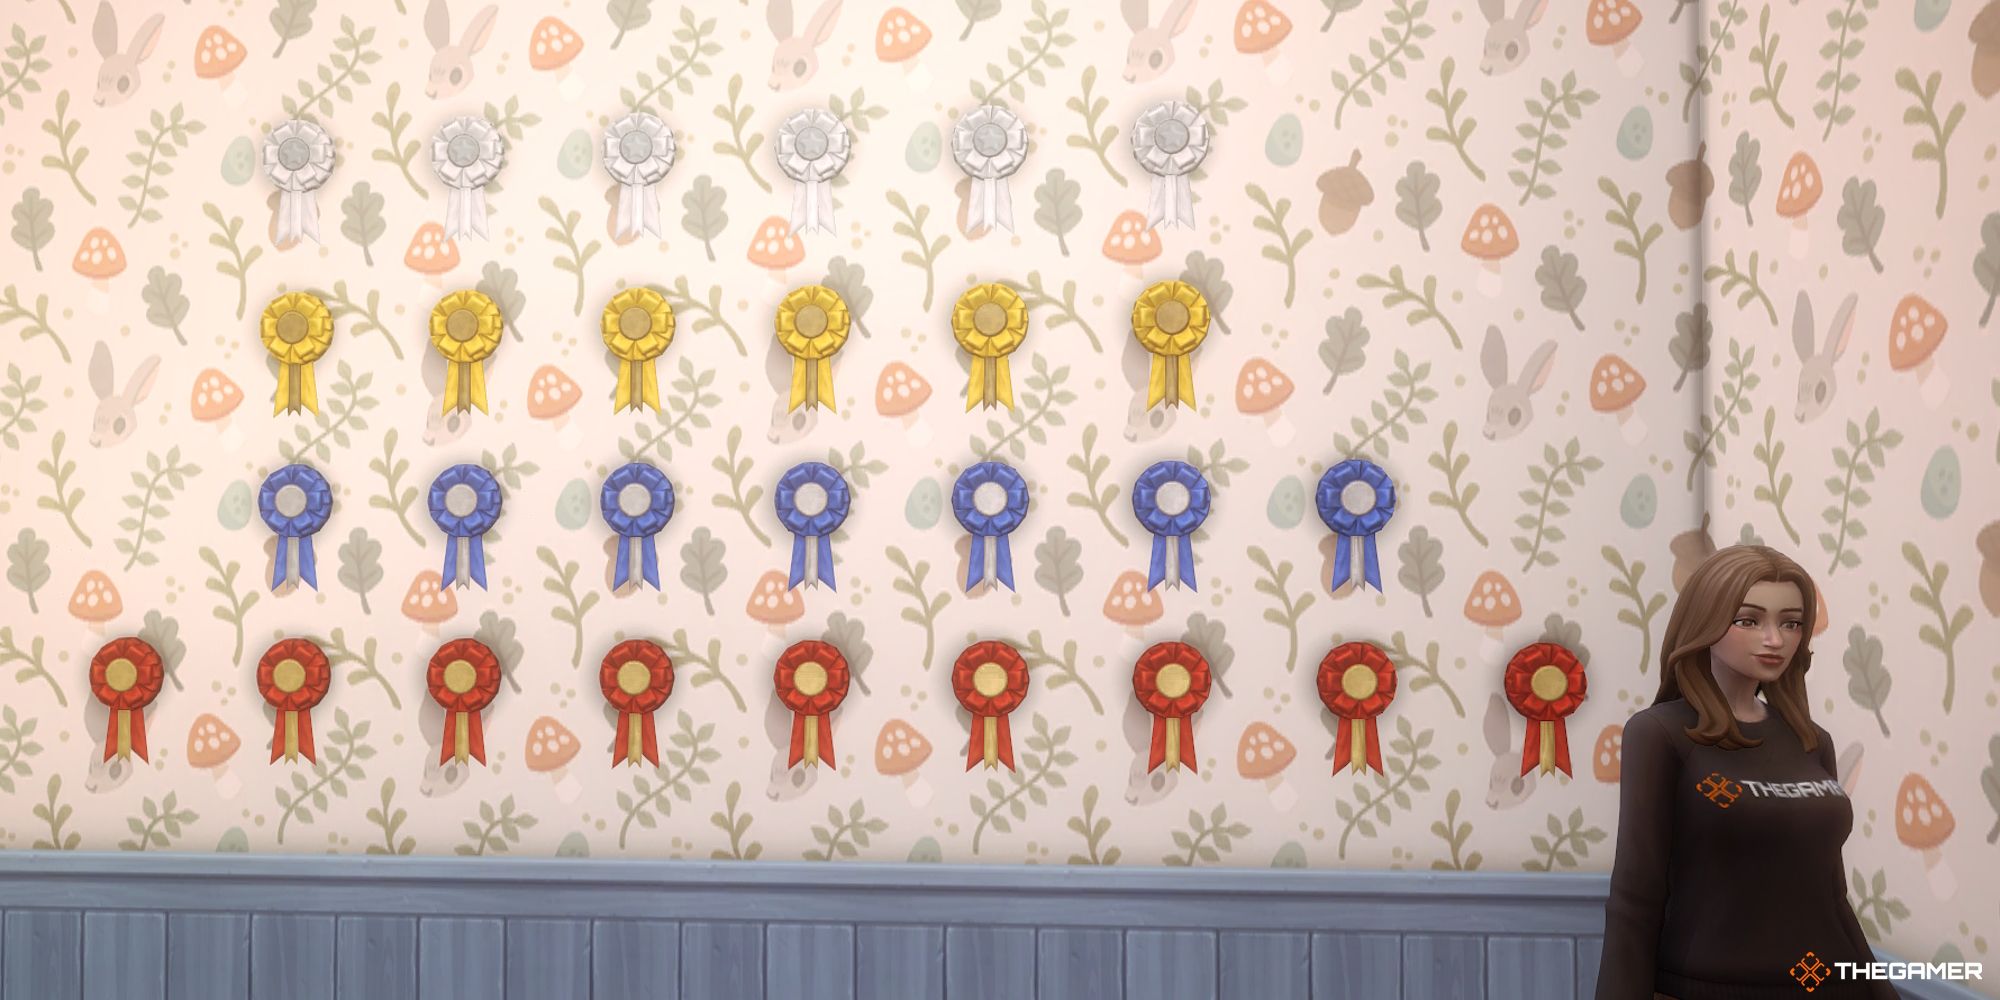 A Sim shows off their Village Fair Ribbons collection